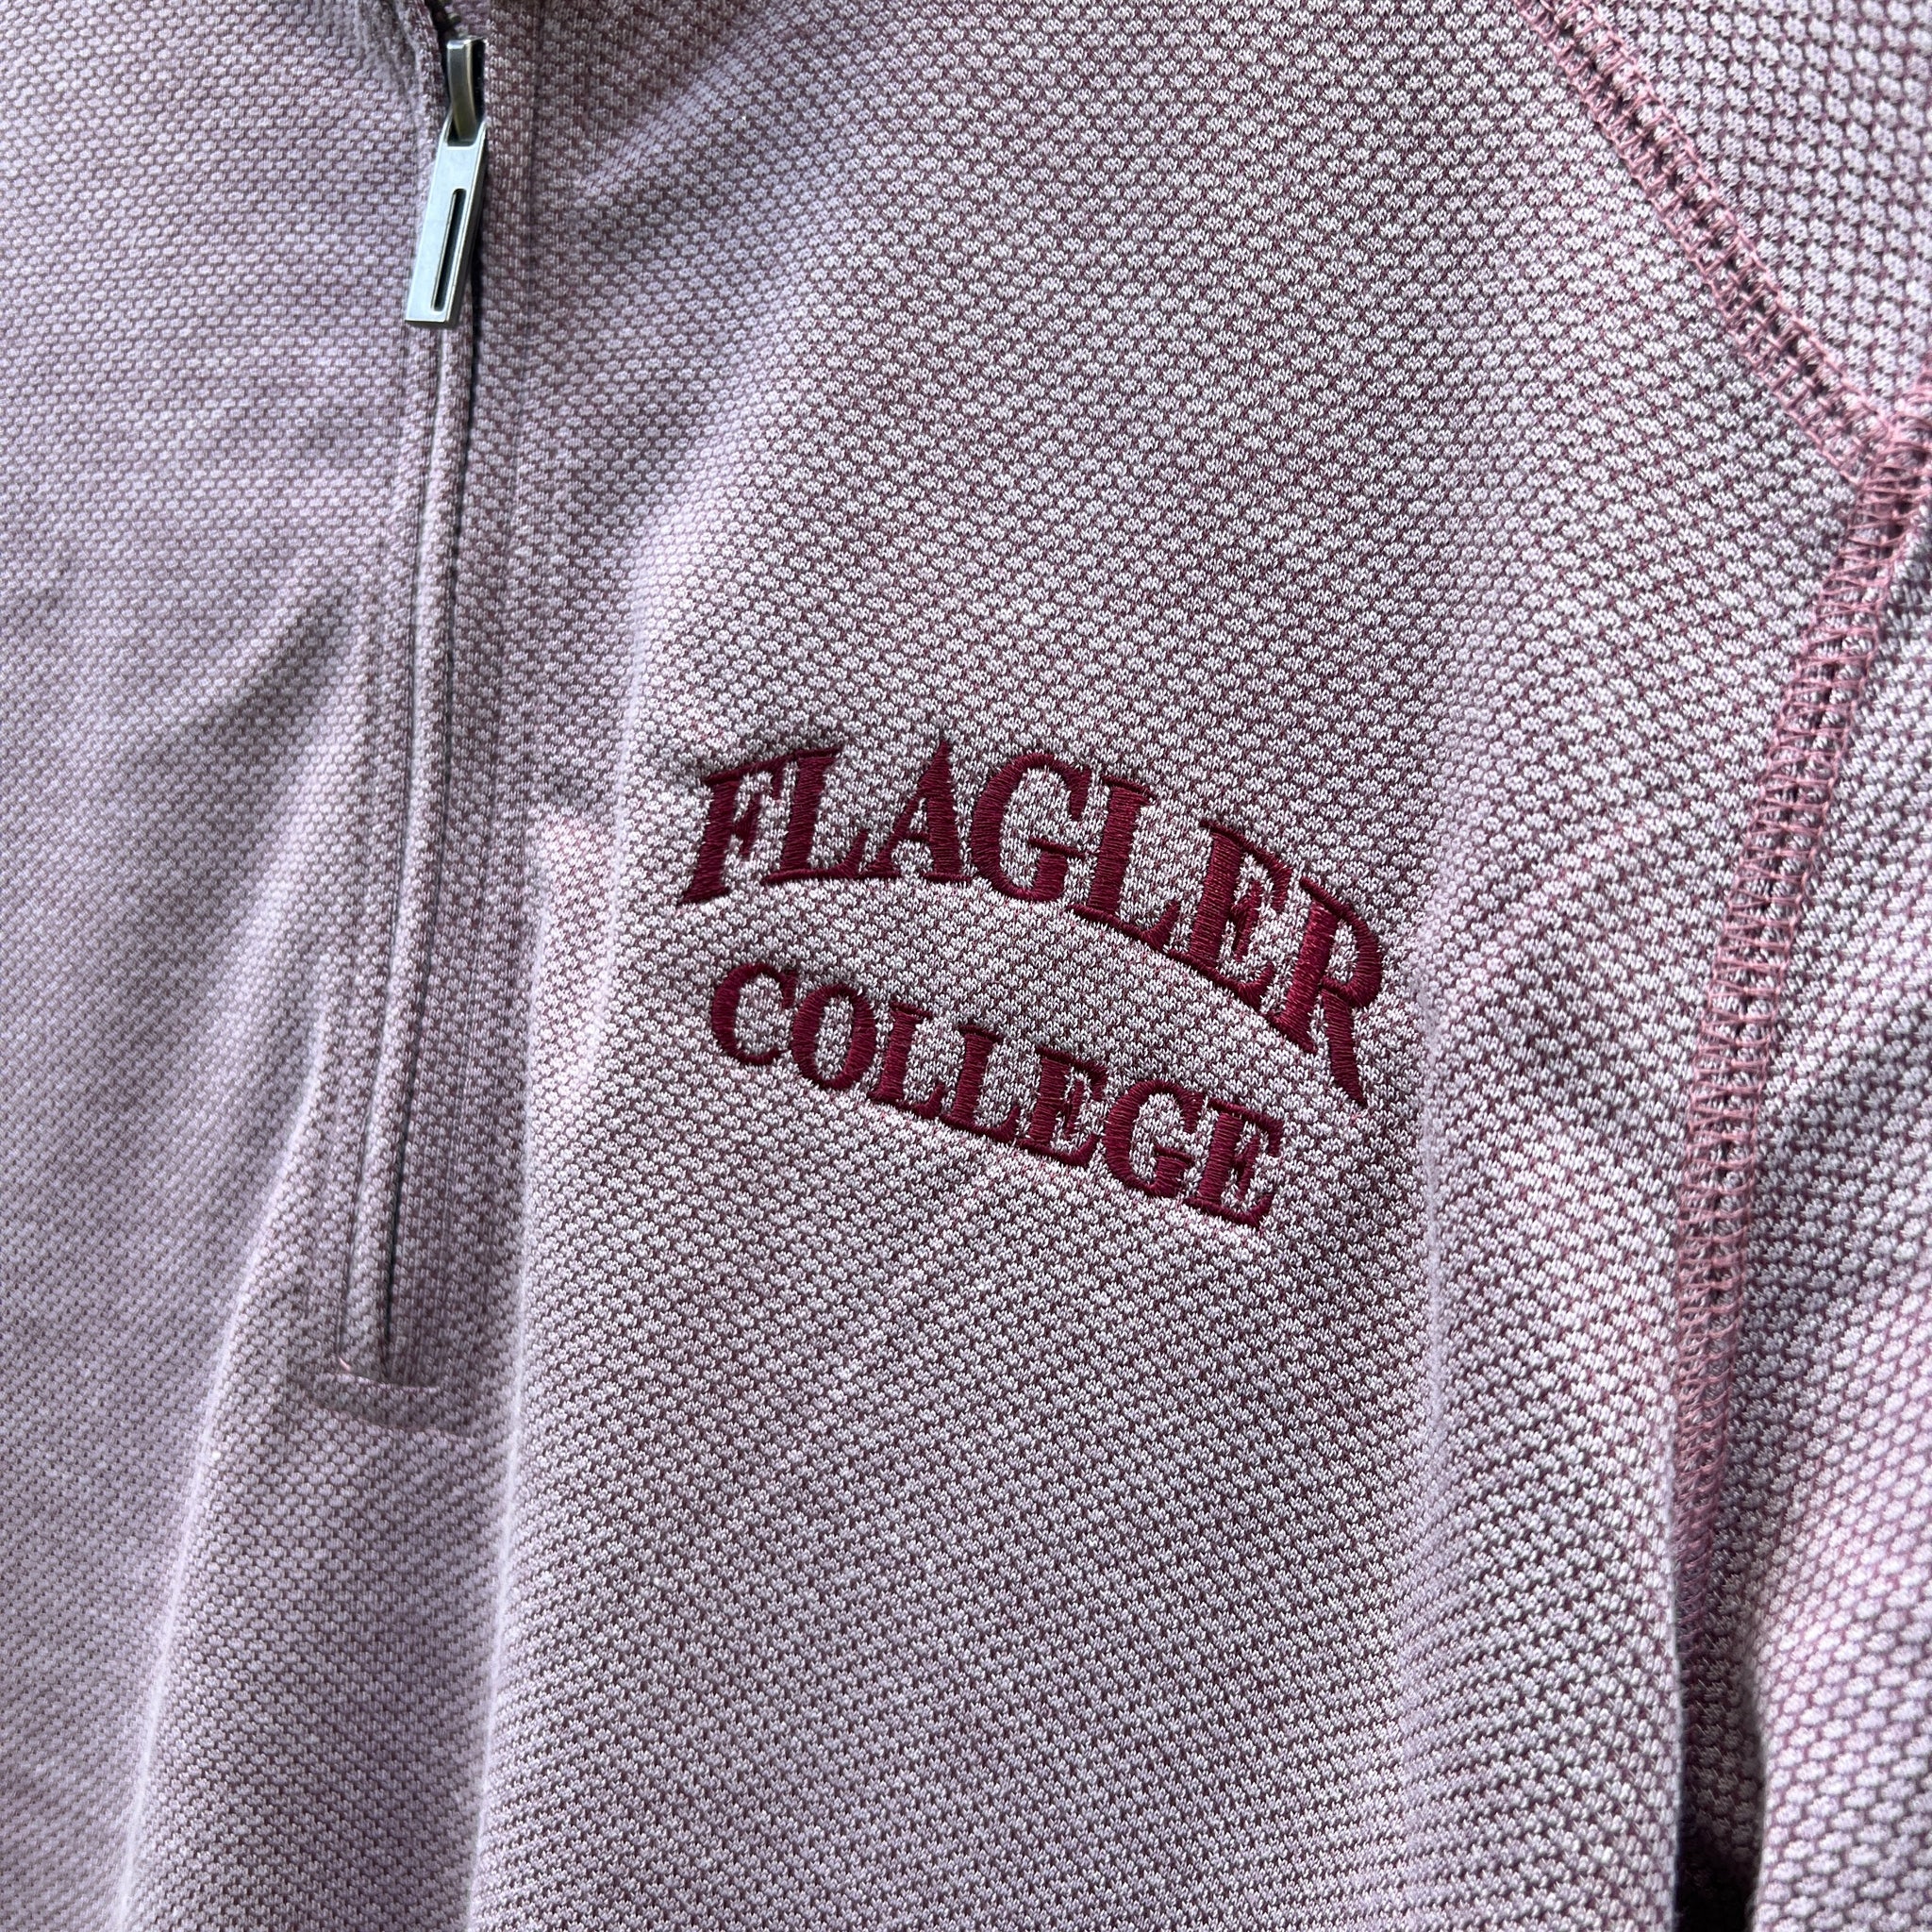 Zoomed in phot of darker crimson imprint saying Flagler over College